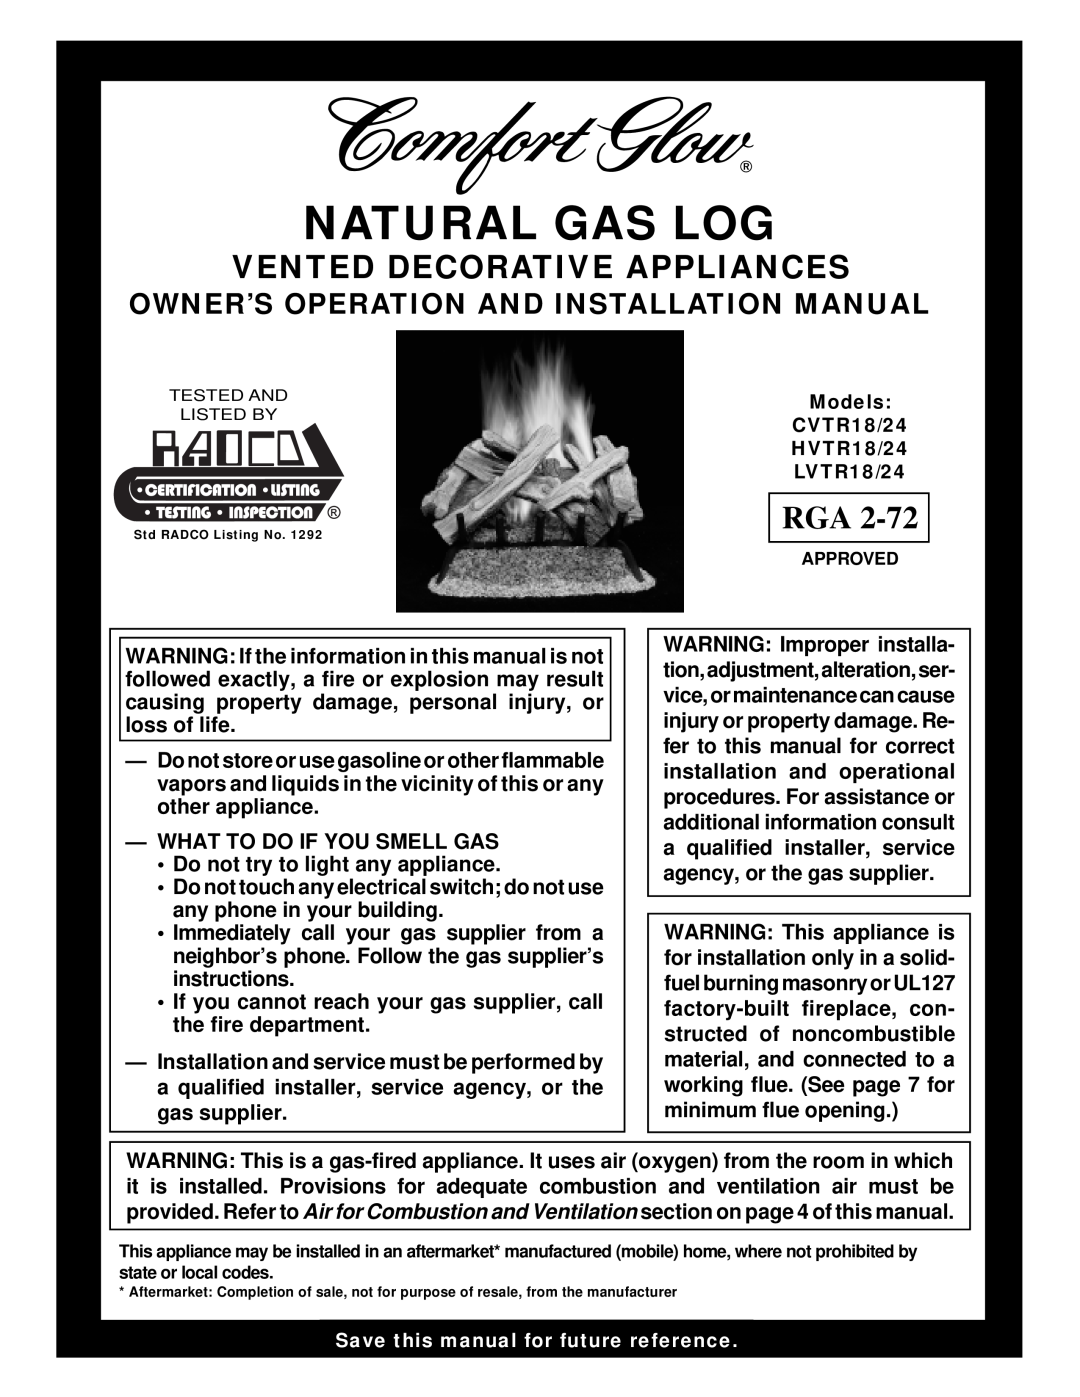 Desa 901910-01A.pdf installation manual Vented Decorative Appliances, Natural Gas Log 